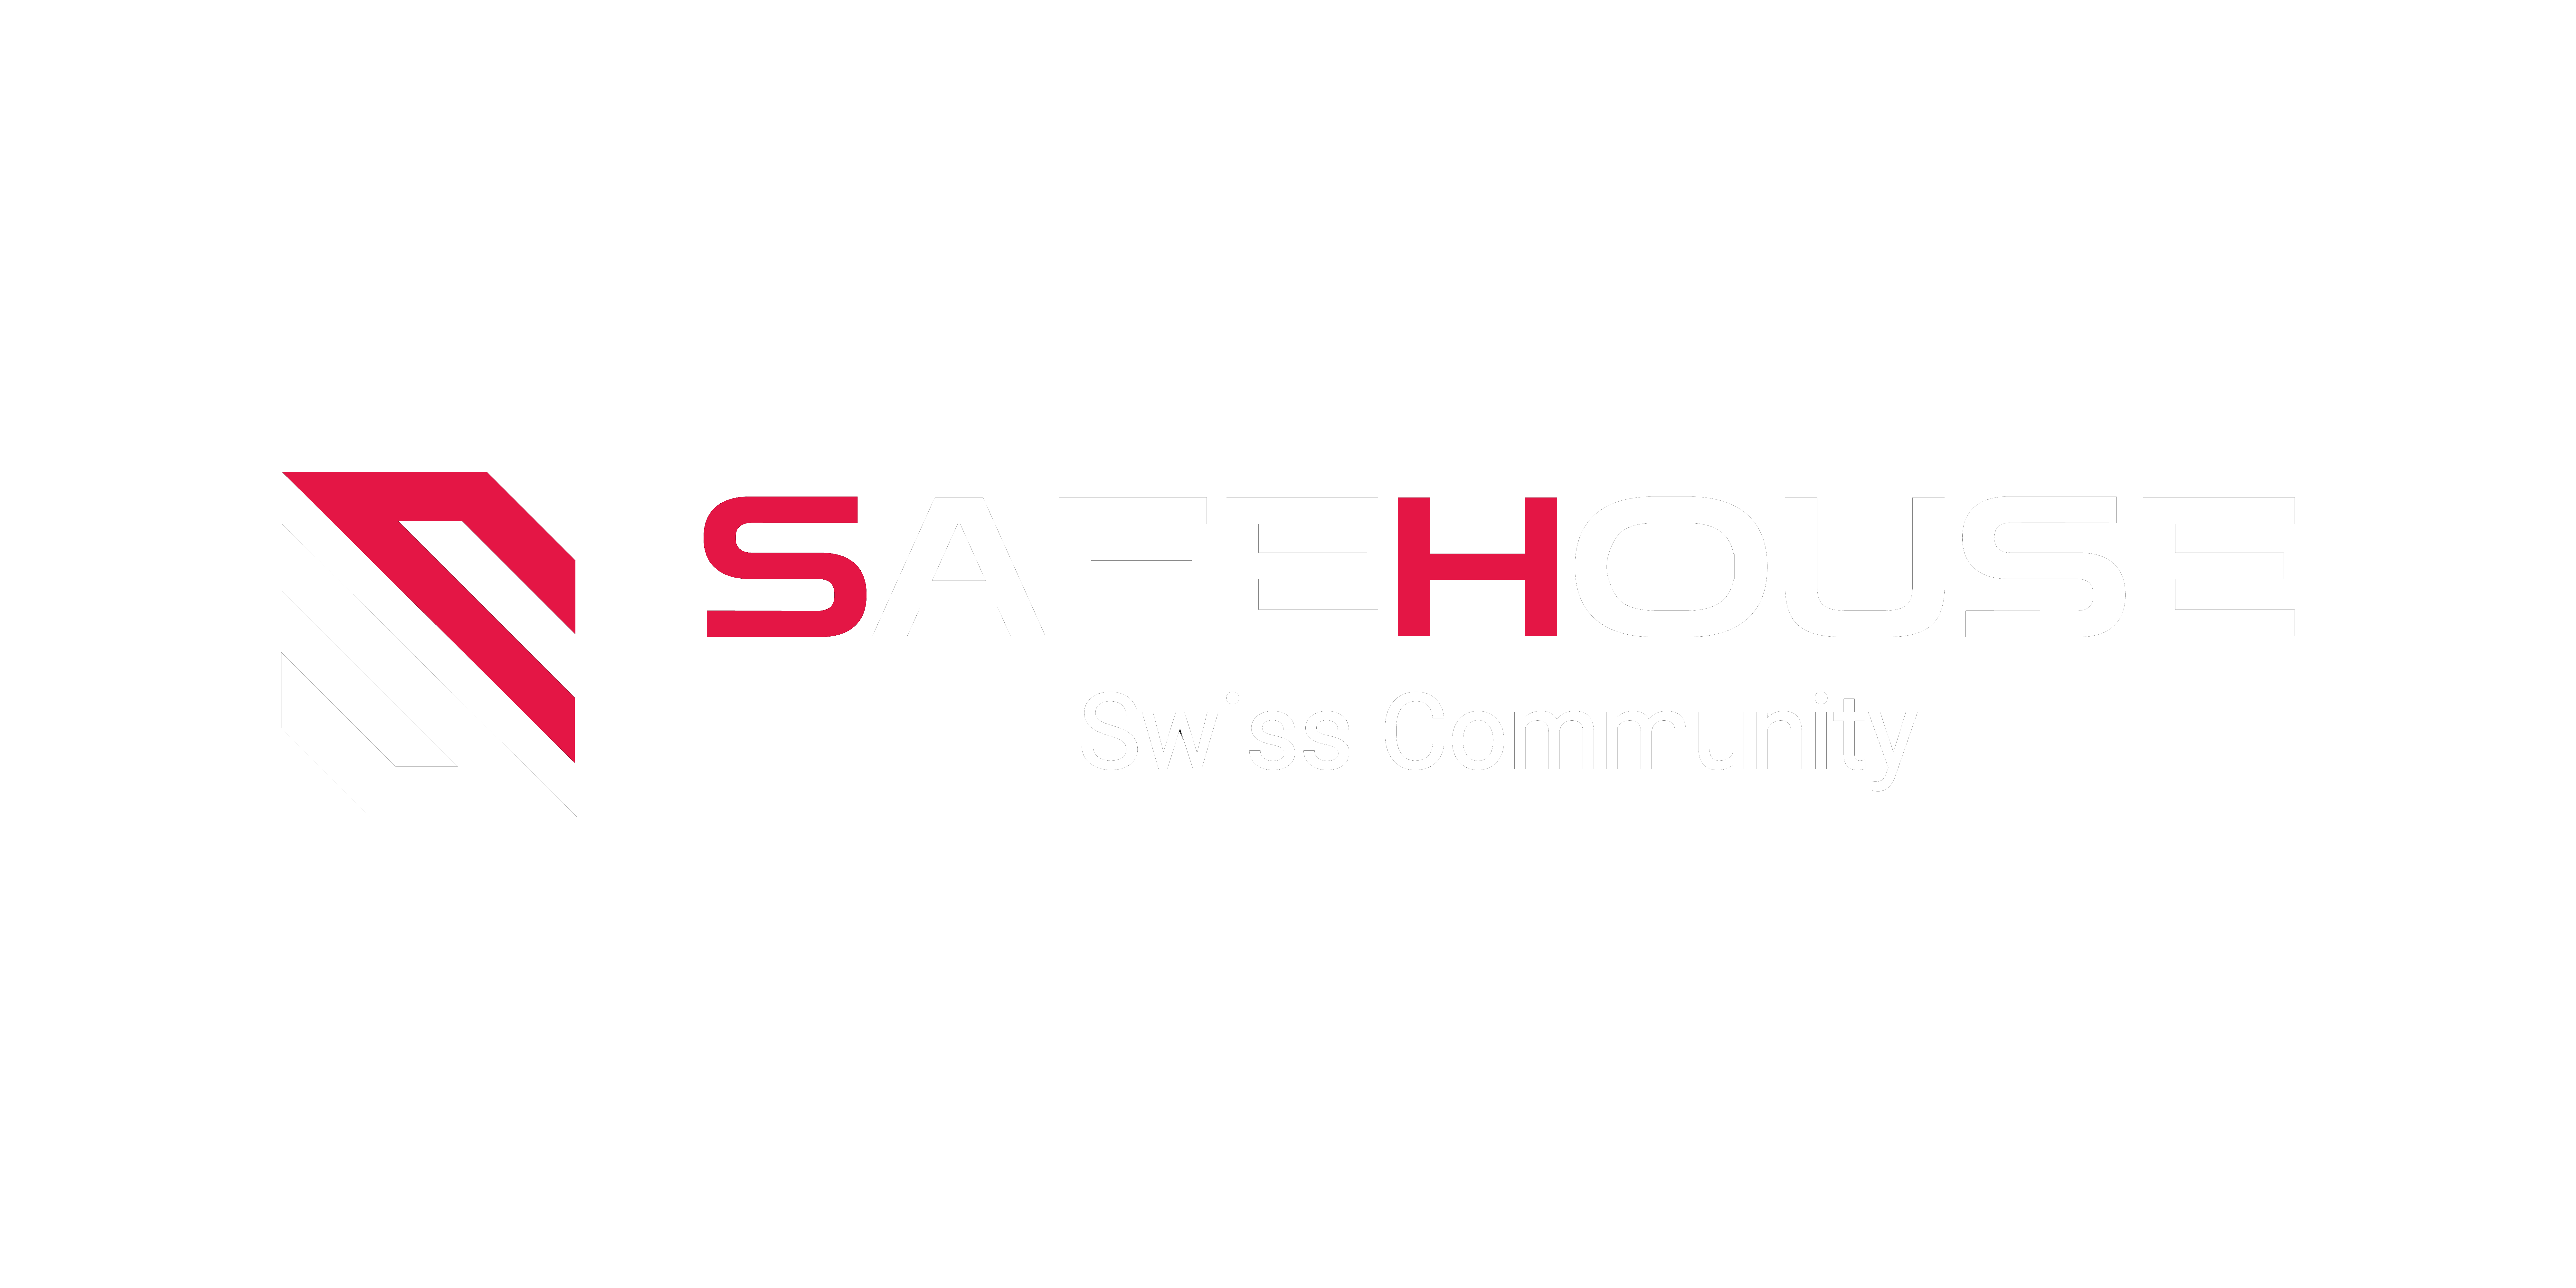 Safehouse Community